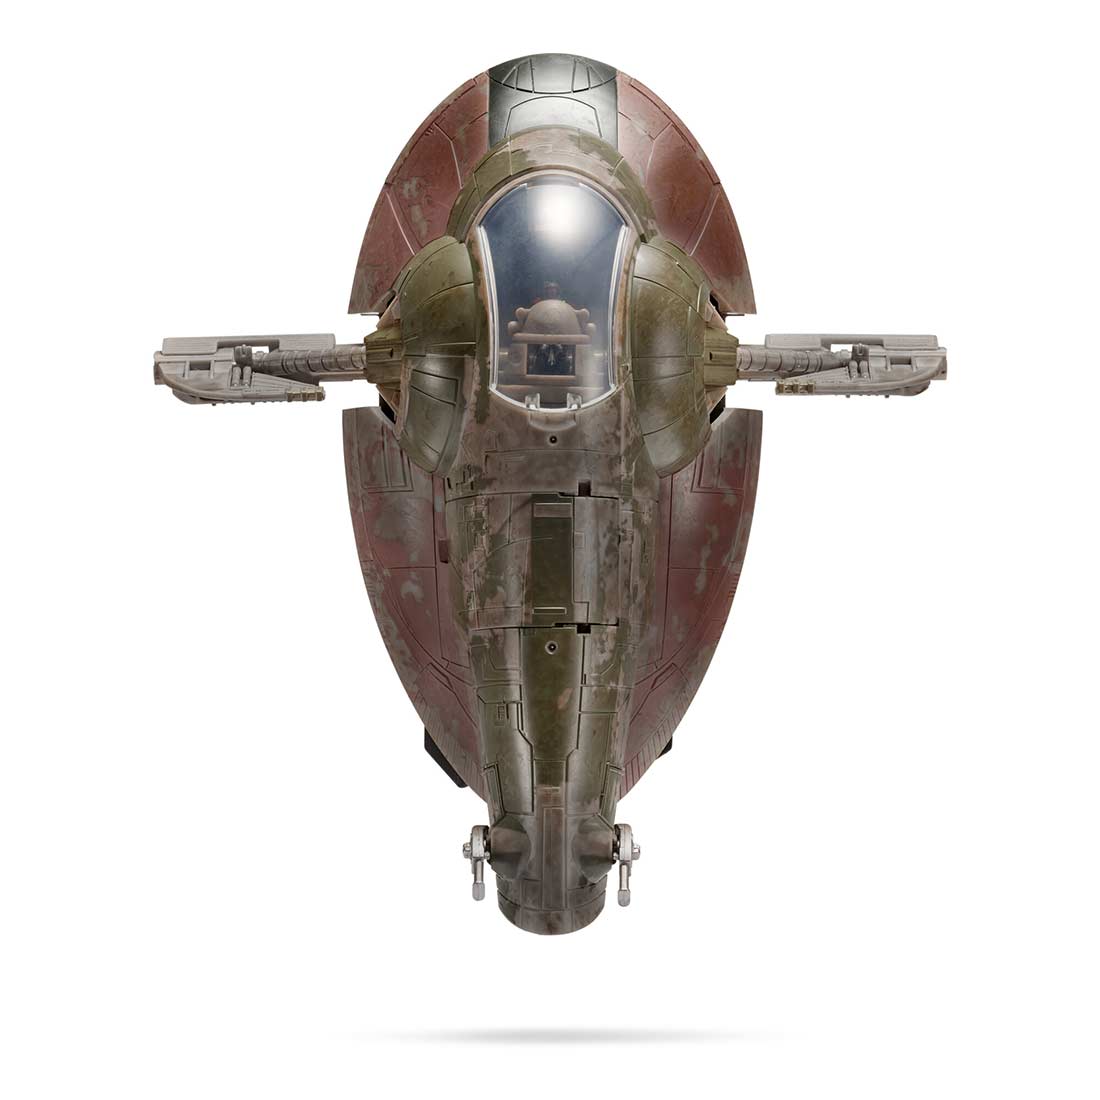 Jazwares - Star Wars: Micro Galaxy Squadron - Starship Class - Boba Fett&#39;s Starship - Marvelous Toys